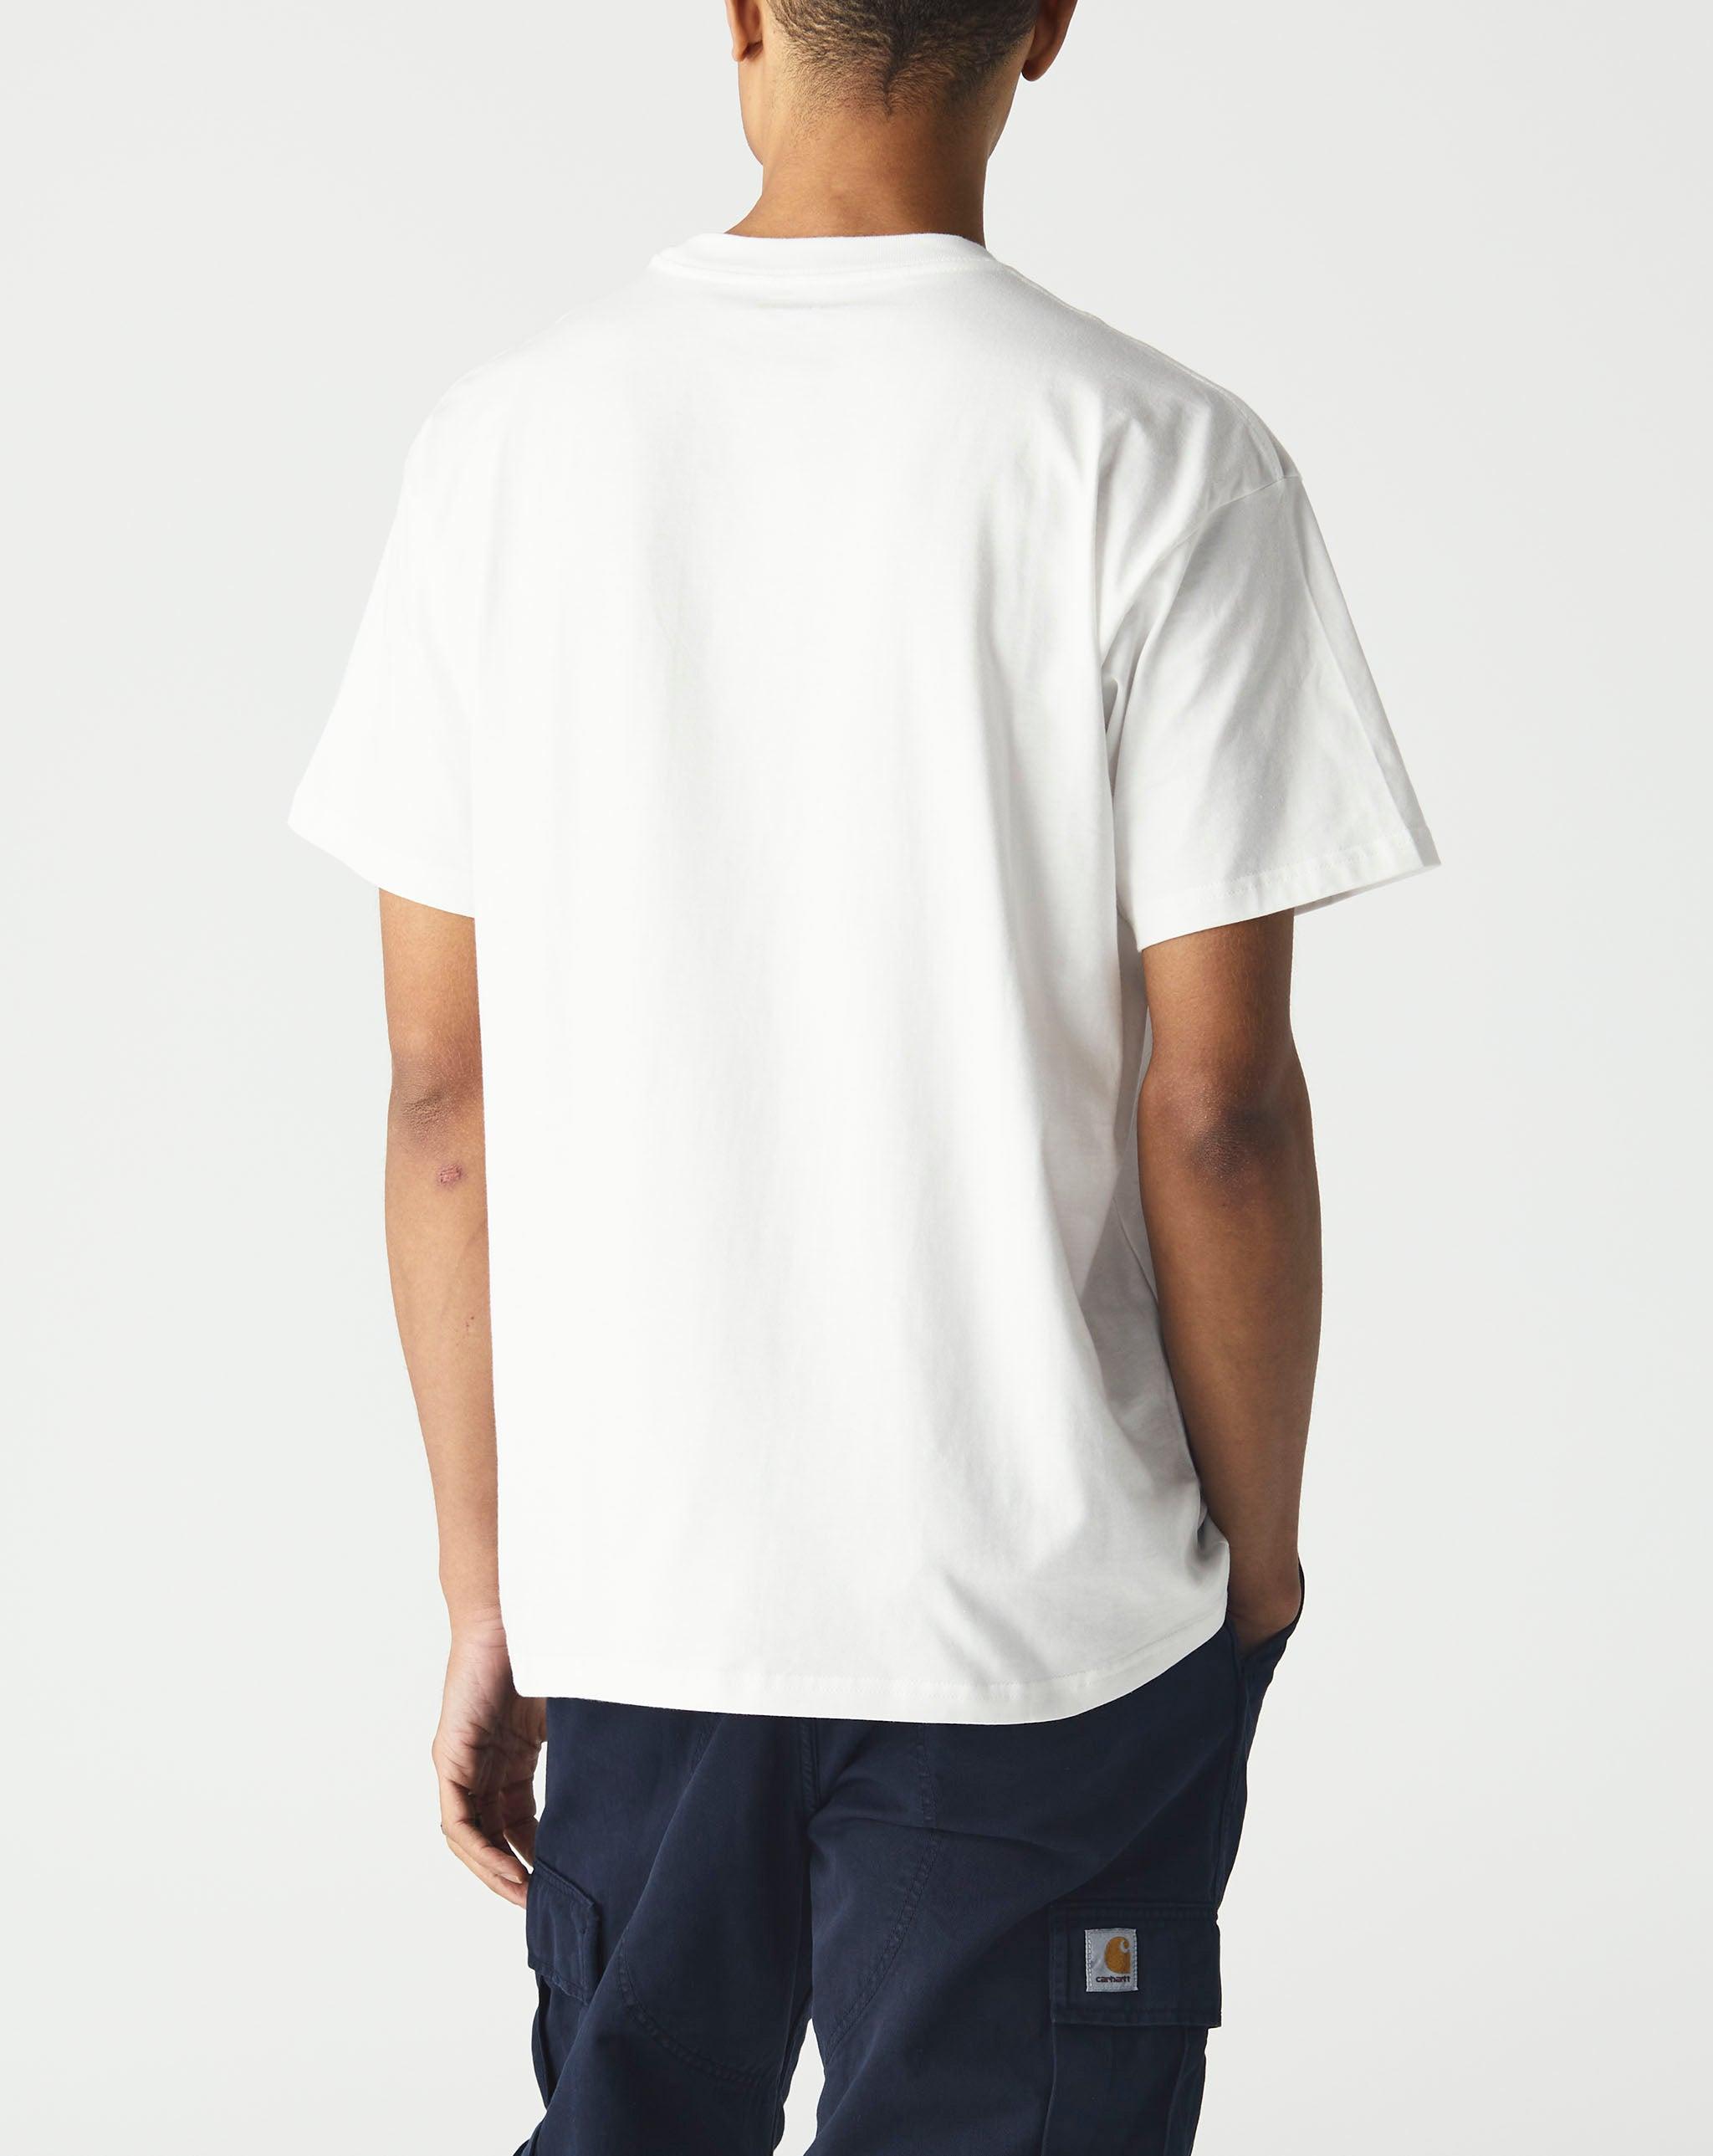 Carhartt WIP Detroit Arch T-shirt in White for Men | Lyst